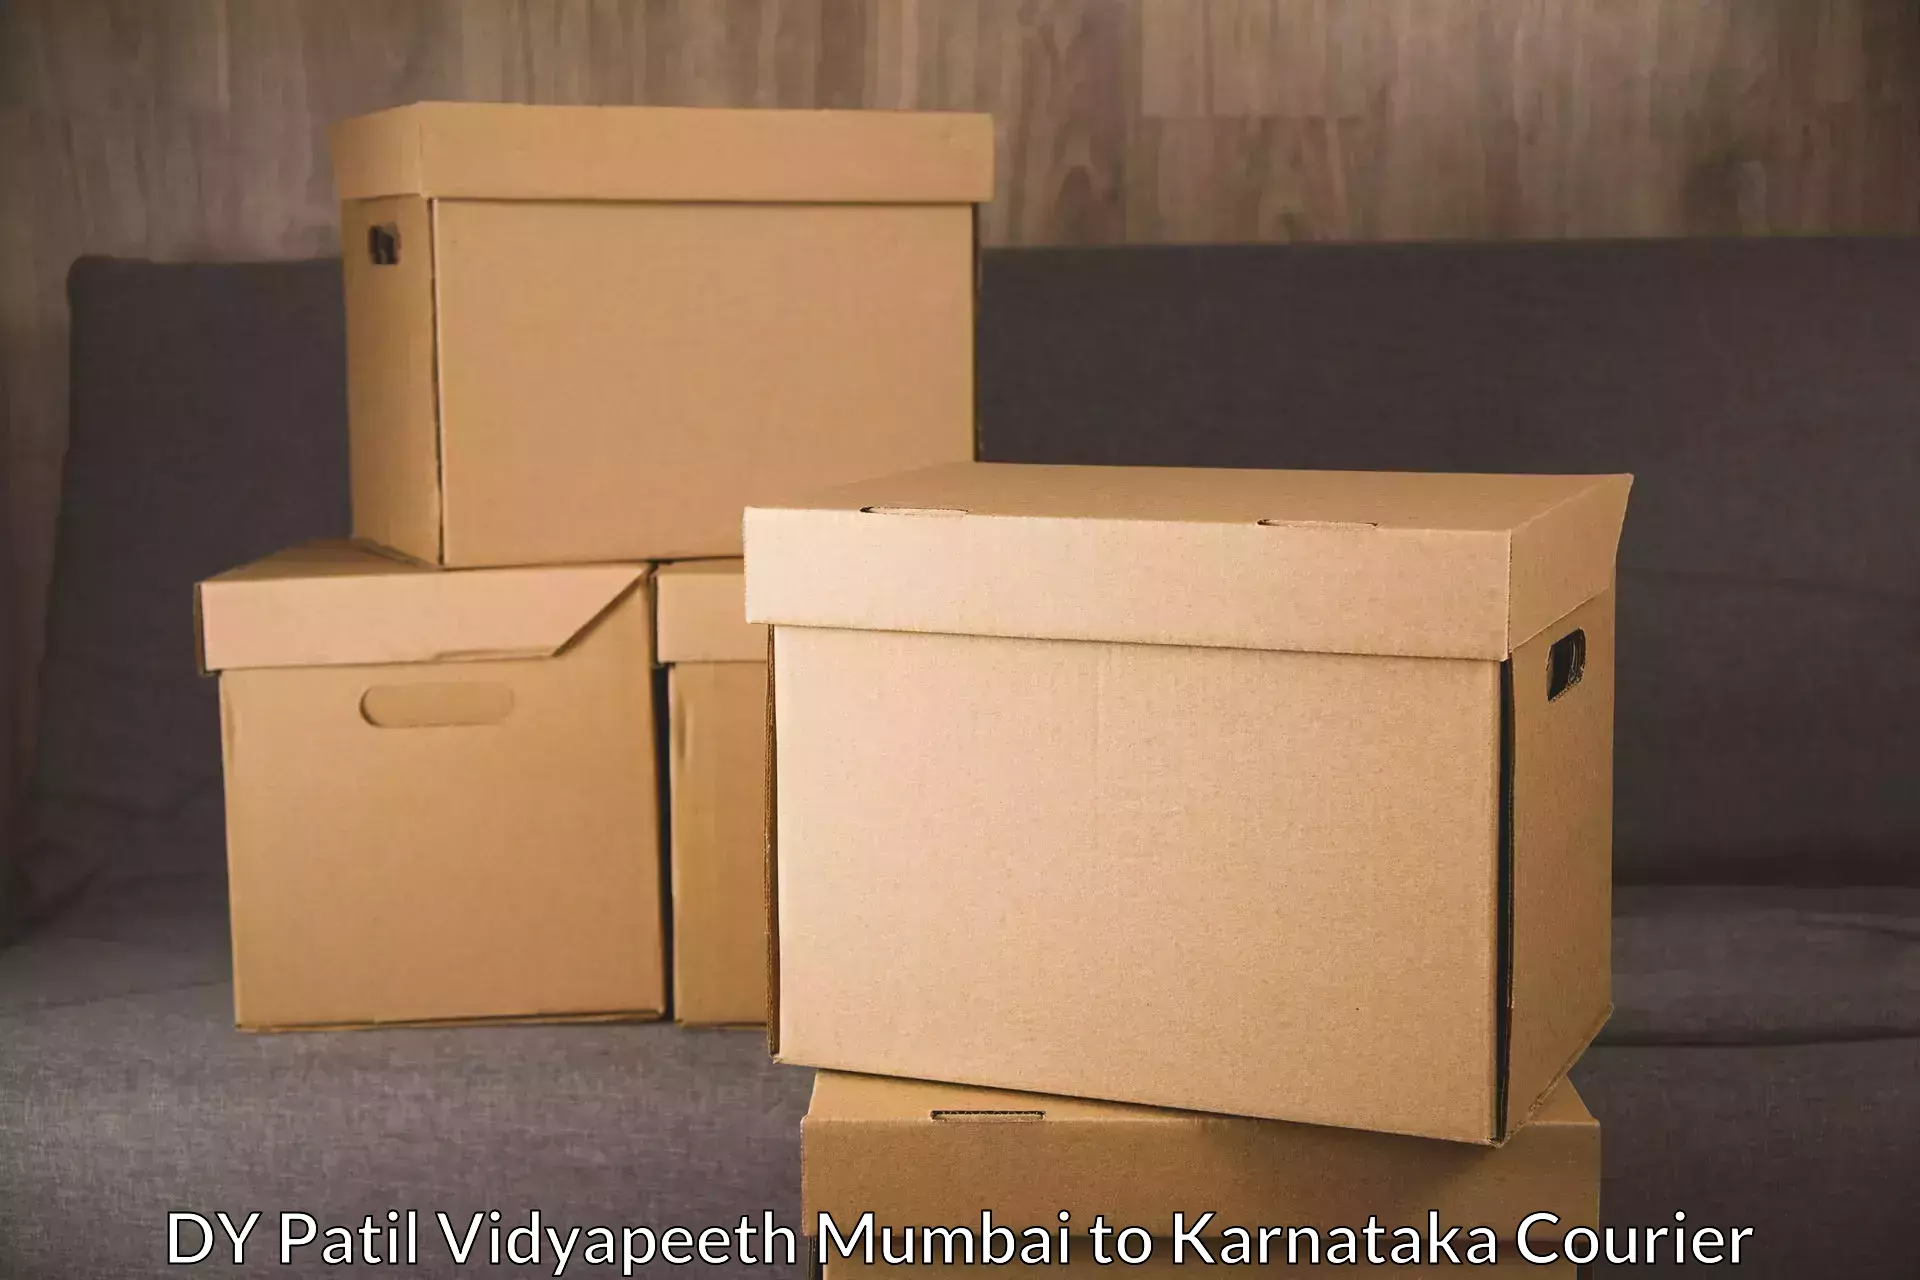 Courier service comparison DY Patil Vidyapeeth Mumbai to Karnataka